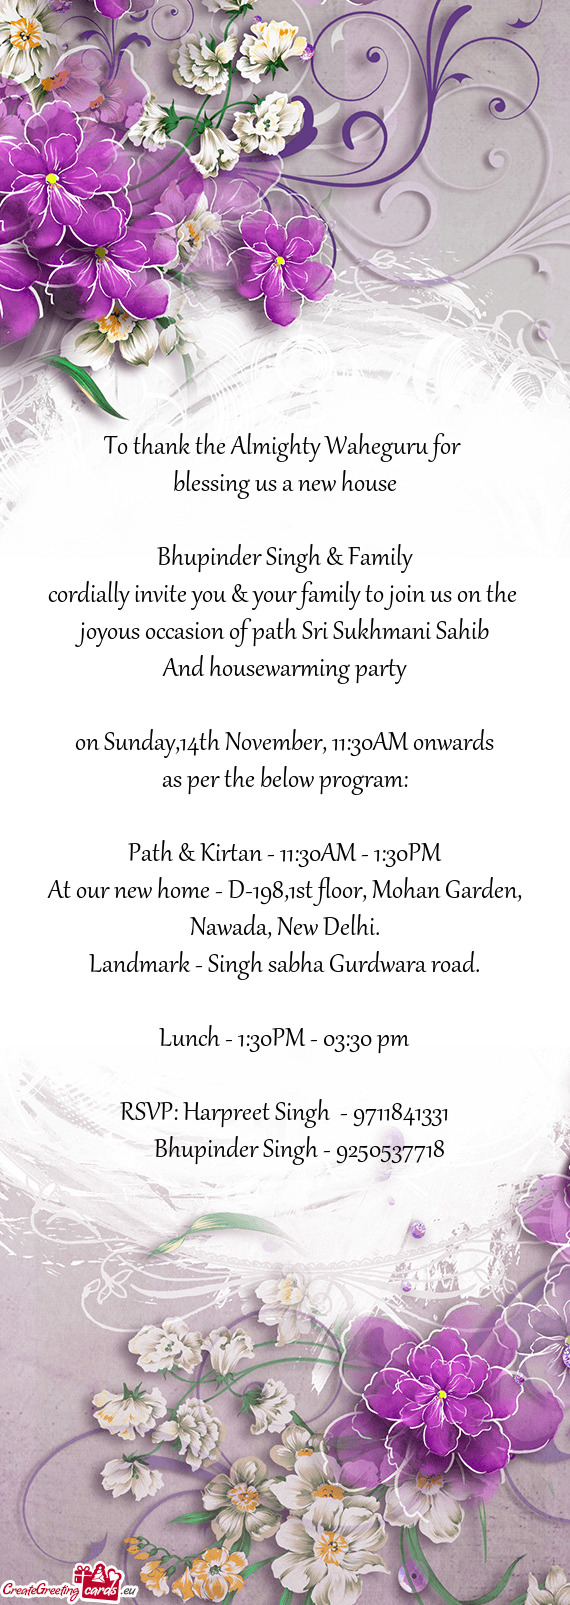 Bhupinder Singh & Family